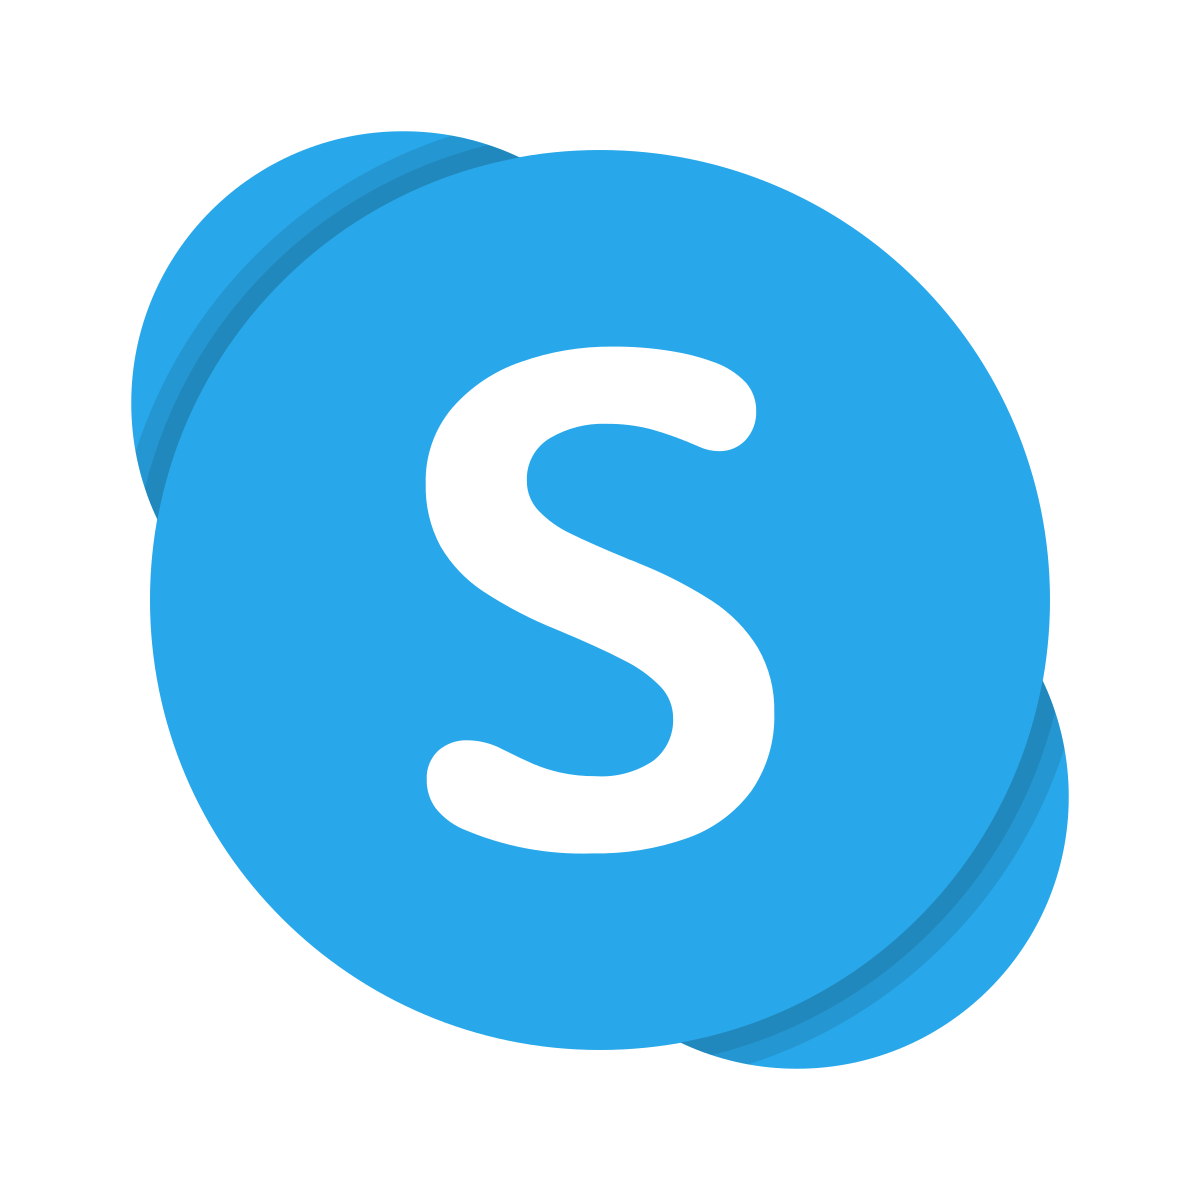 Prenota un appuntamento in videconferenza con Skype